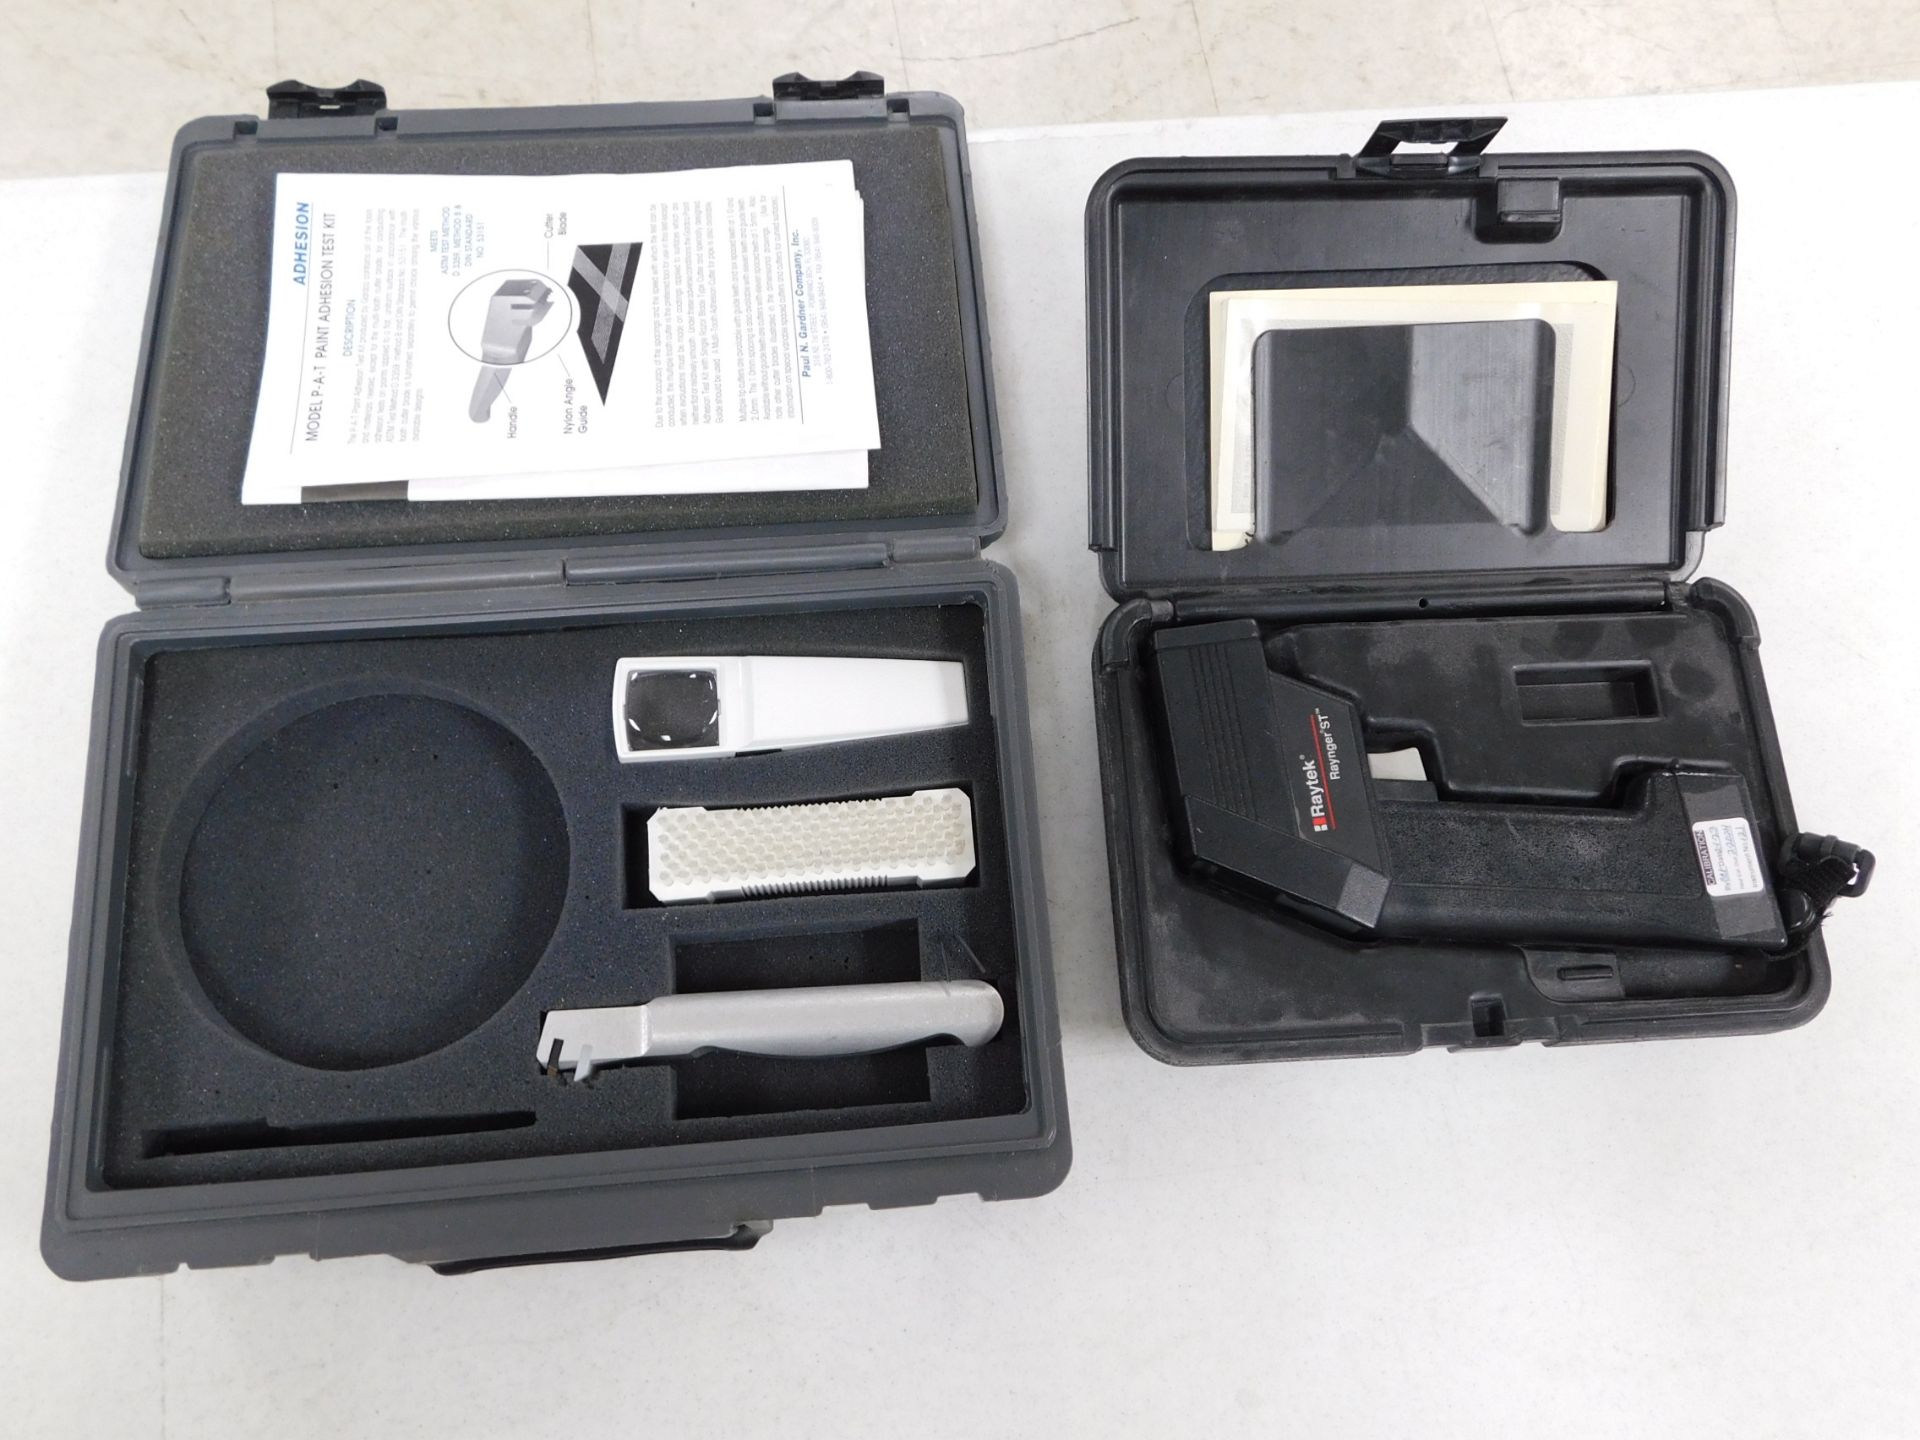 Raytek Raynger ST Infrared Thermometer and Gardco Paint Adhesion Test Kit